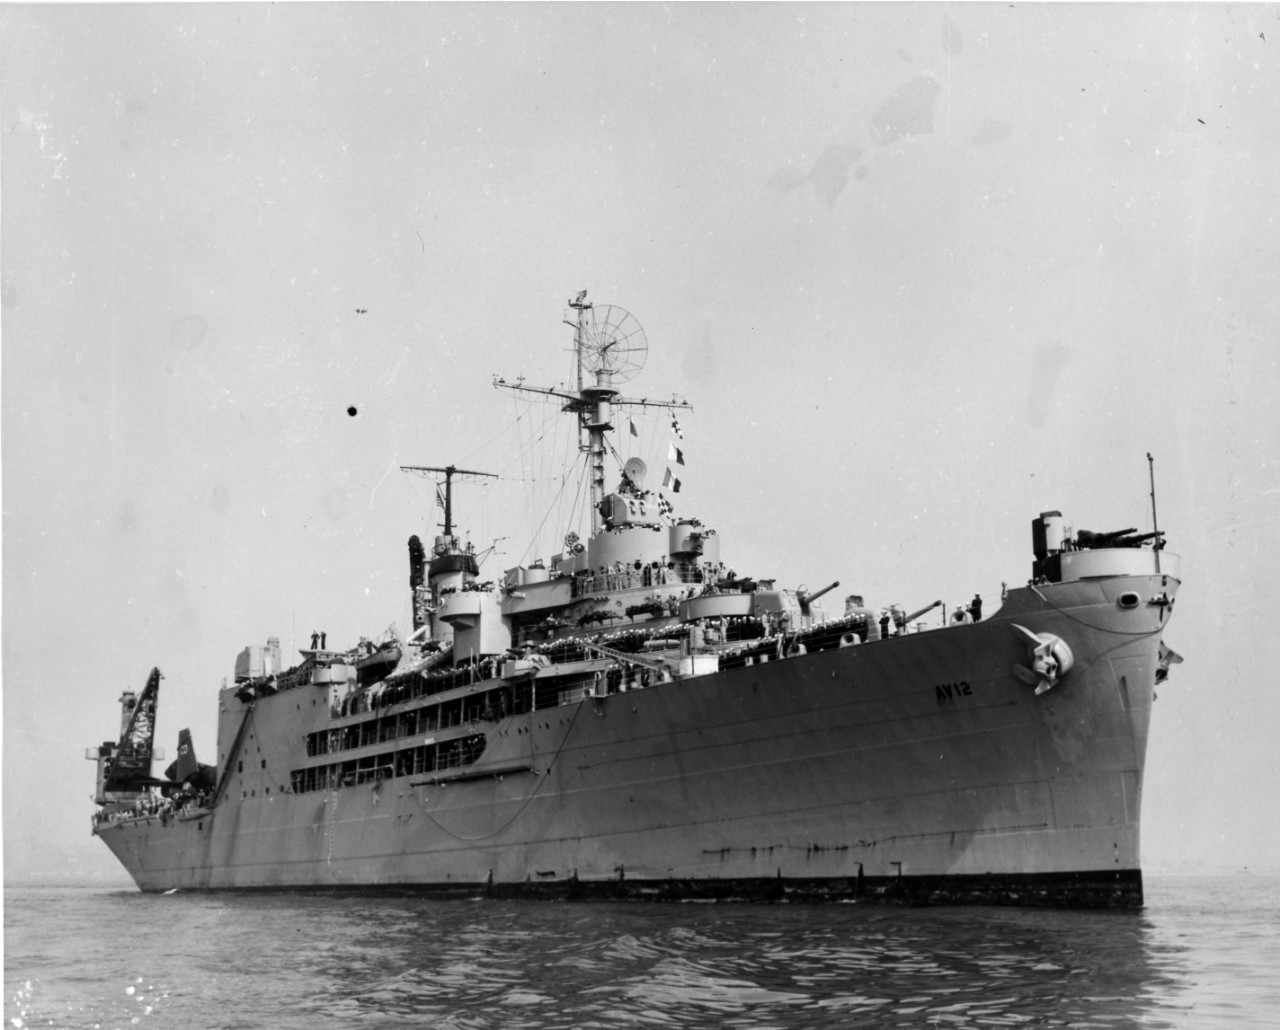 <p>Starboard bow&nbsp;view of USS&nbsp;<i>Pine Island</i>&nbsp;(AV-12) with sailors manning the rails, circa 1945-1950.</p>